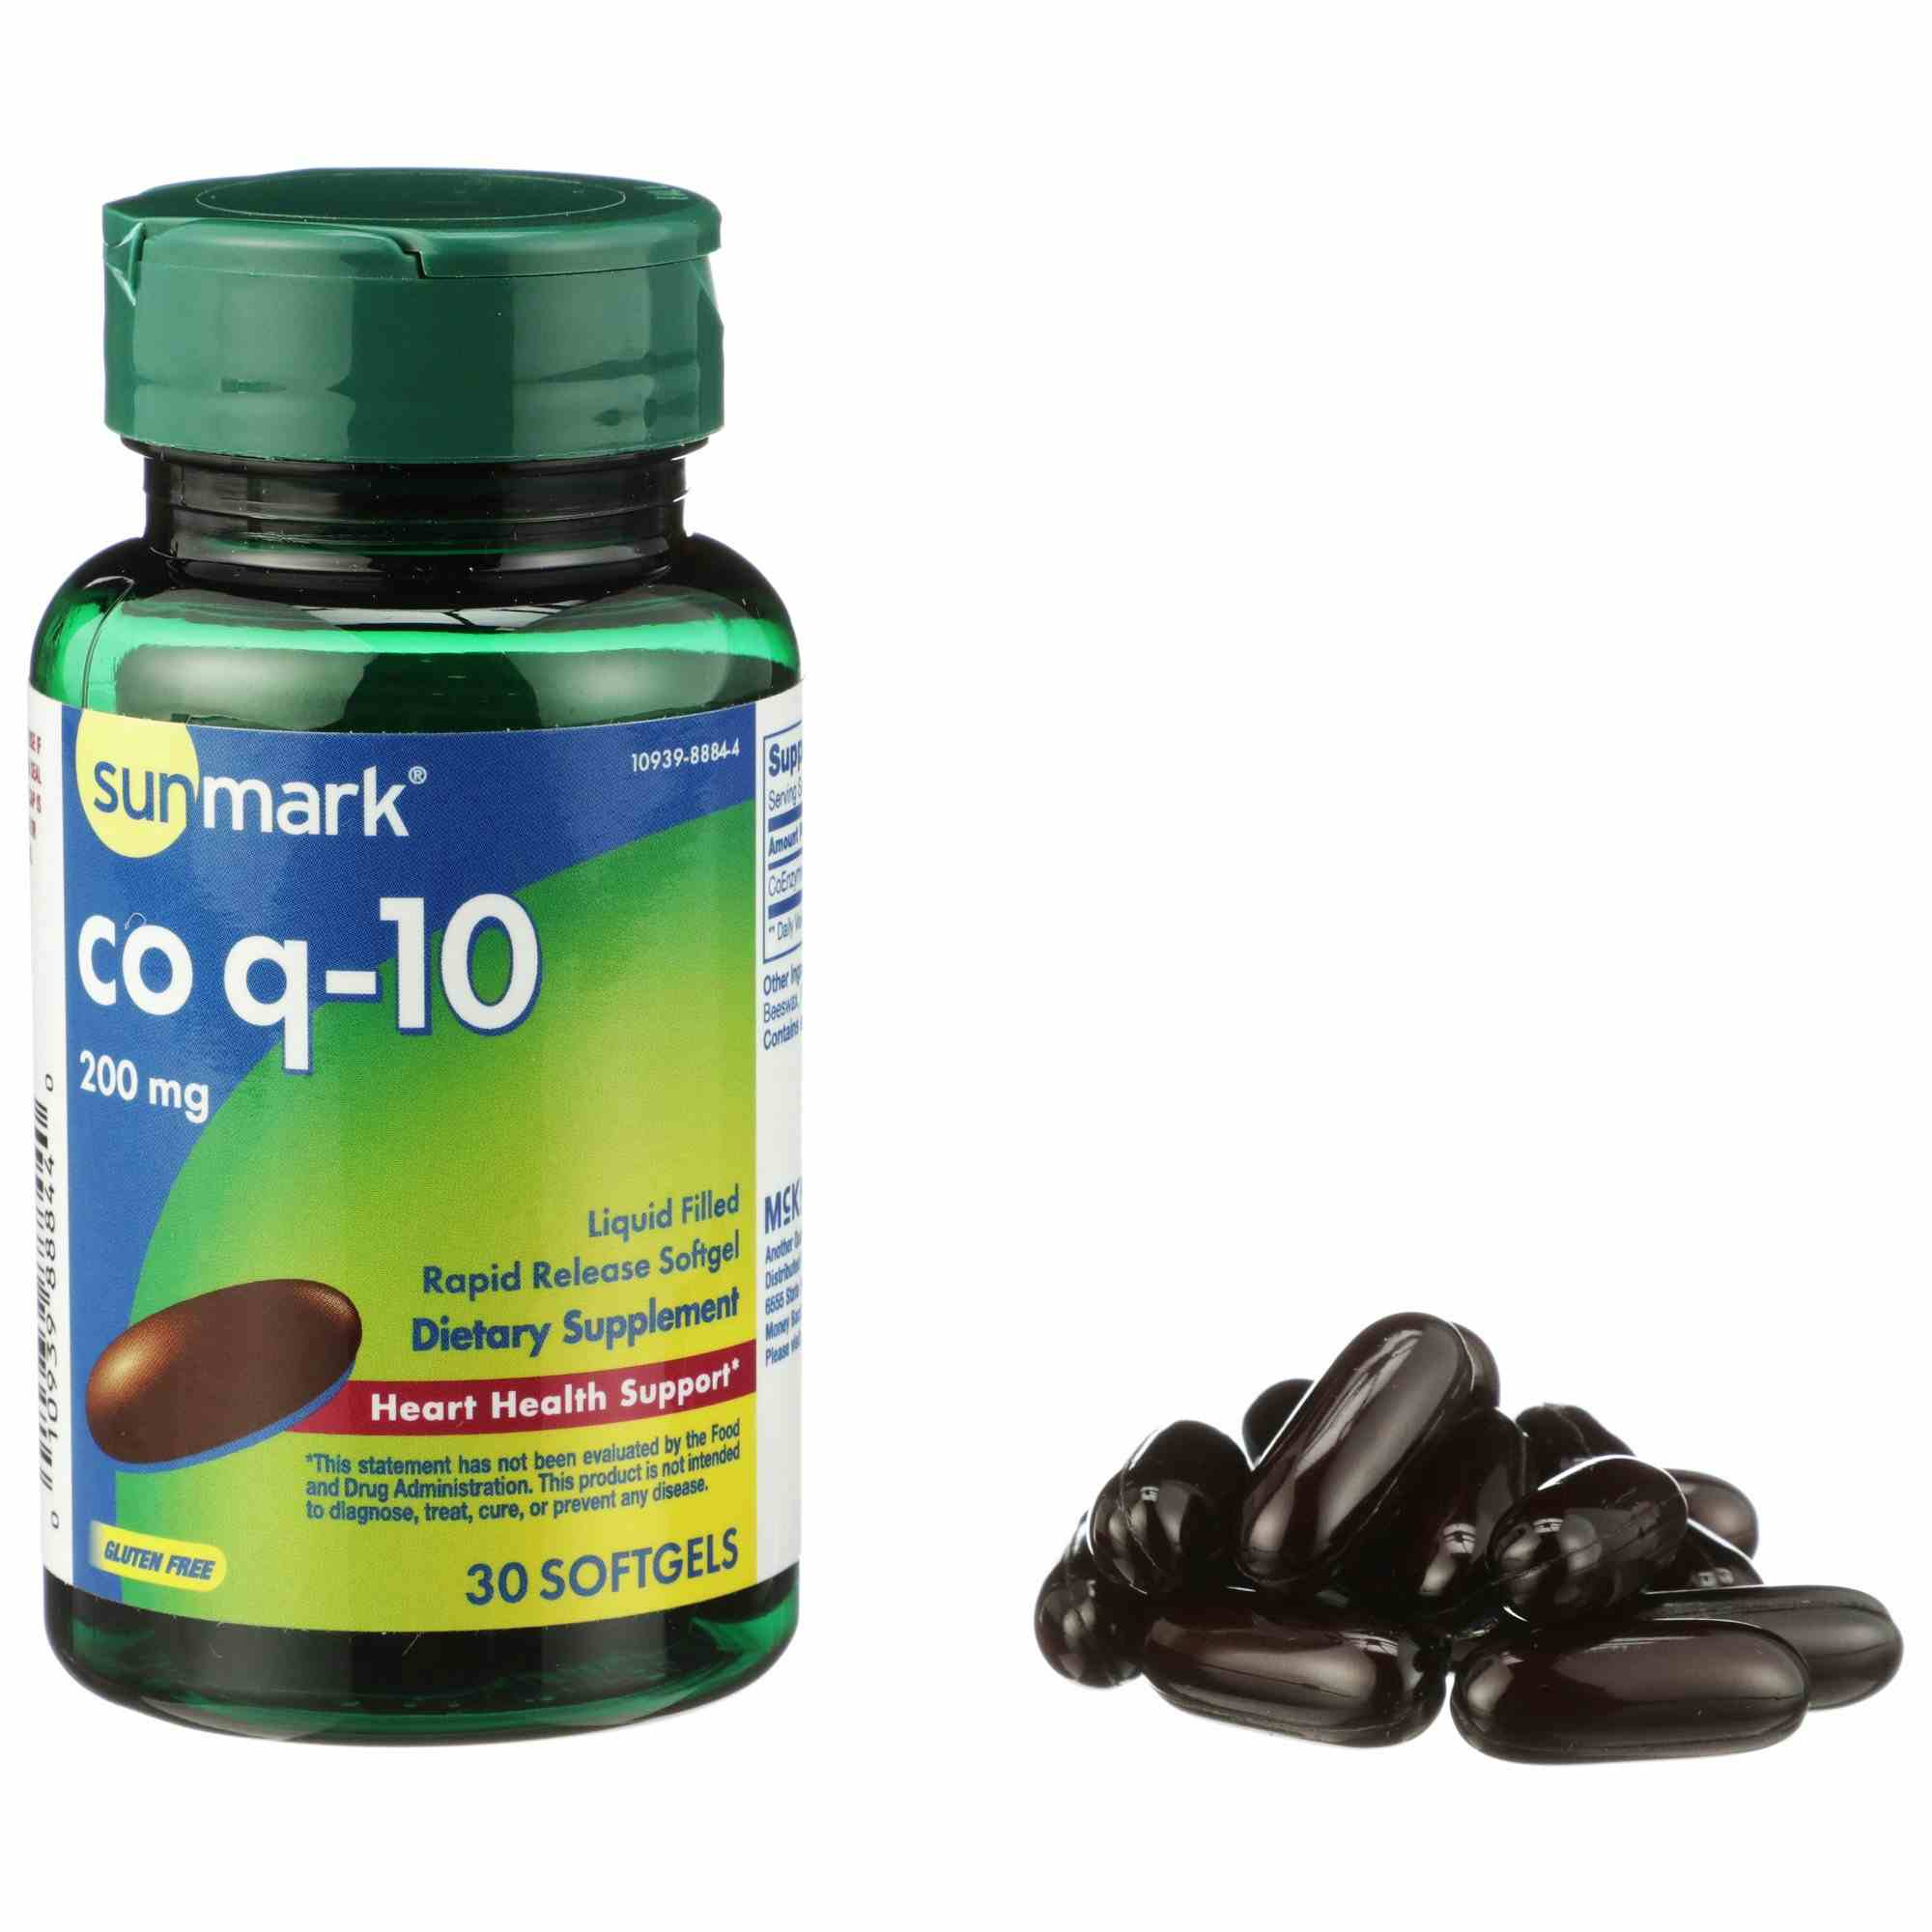 Suunmark Co Q-10 Dietary Supplement, 200 mg, 30 Softgels, 01093988844, 1 Bottle